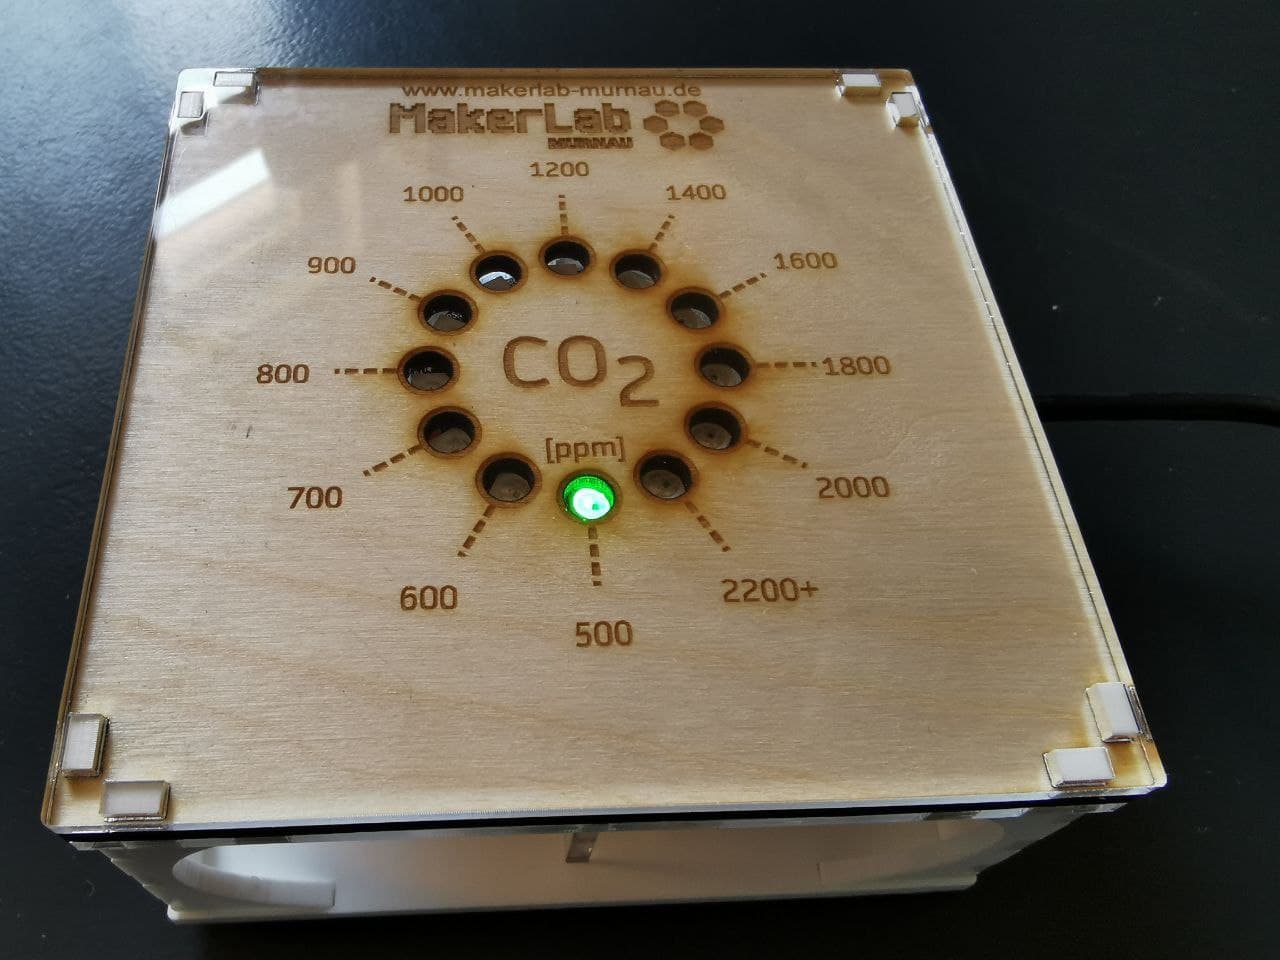 Prototyp der CO2 Ampell aus dem MakerLab